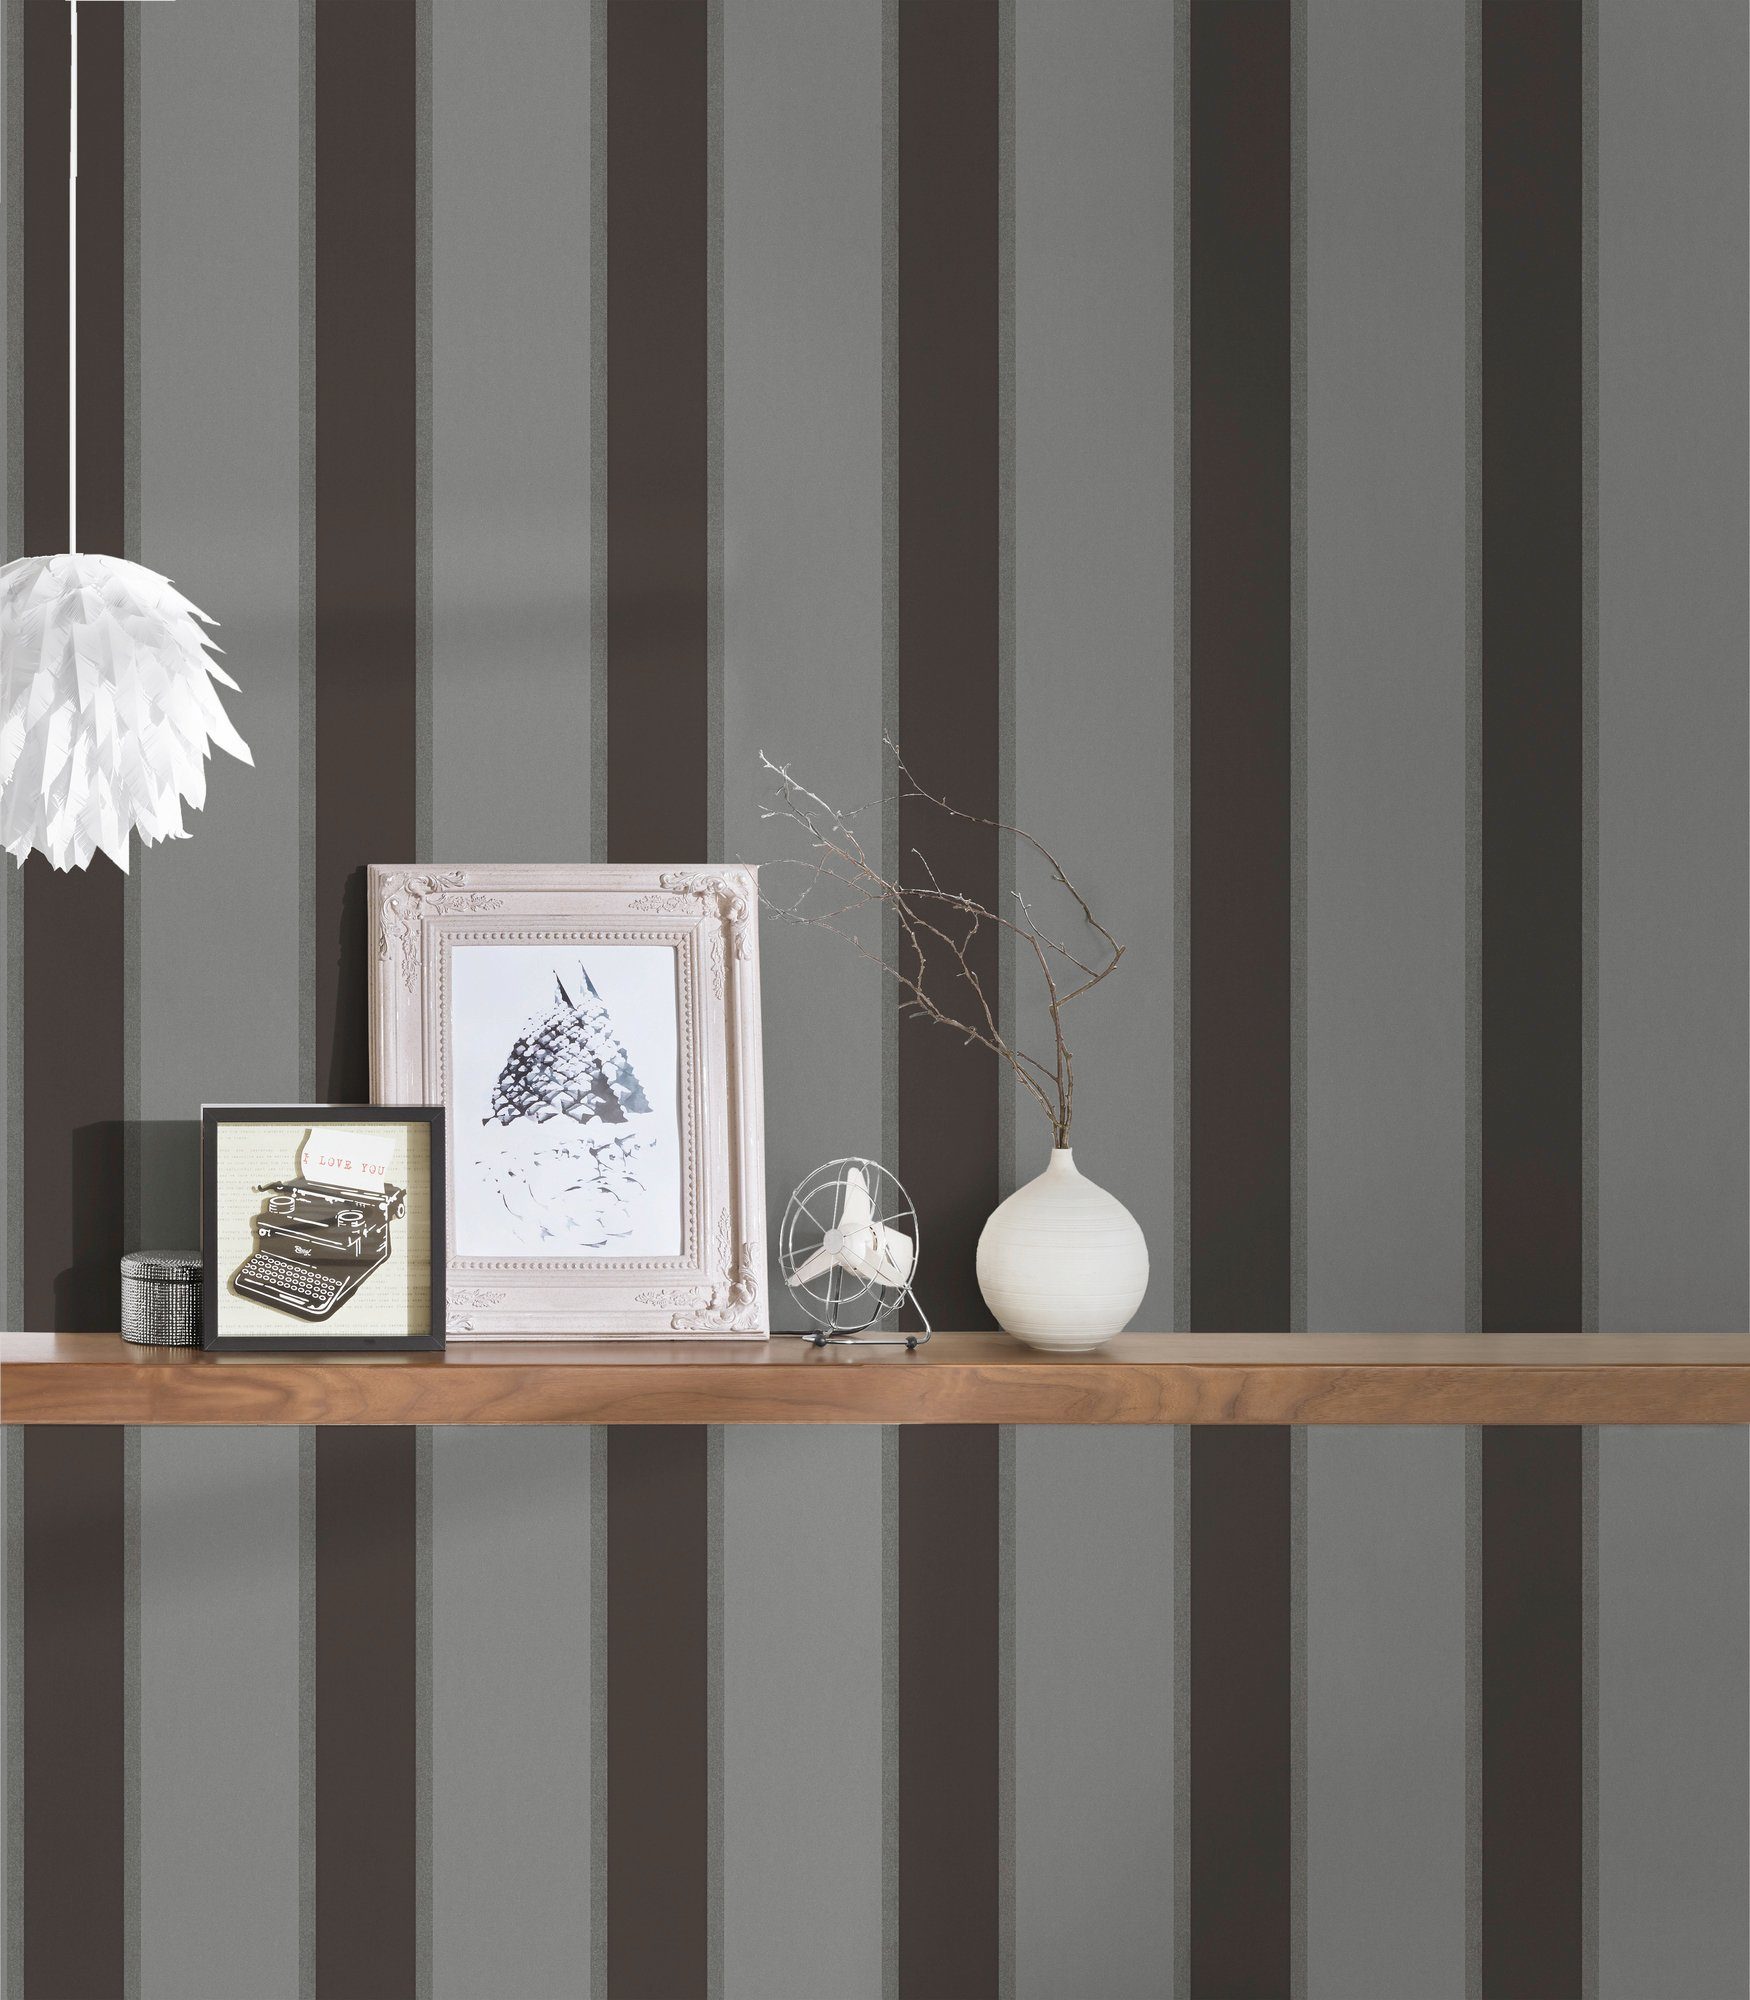 A.S. Création Streifen Alpha, Vliestapete grau/silberfarben/schwarz Architects glatt, Paper Tapete matt, glänzend, gestreift